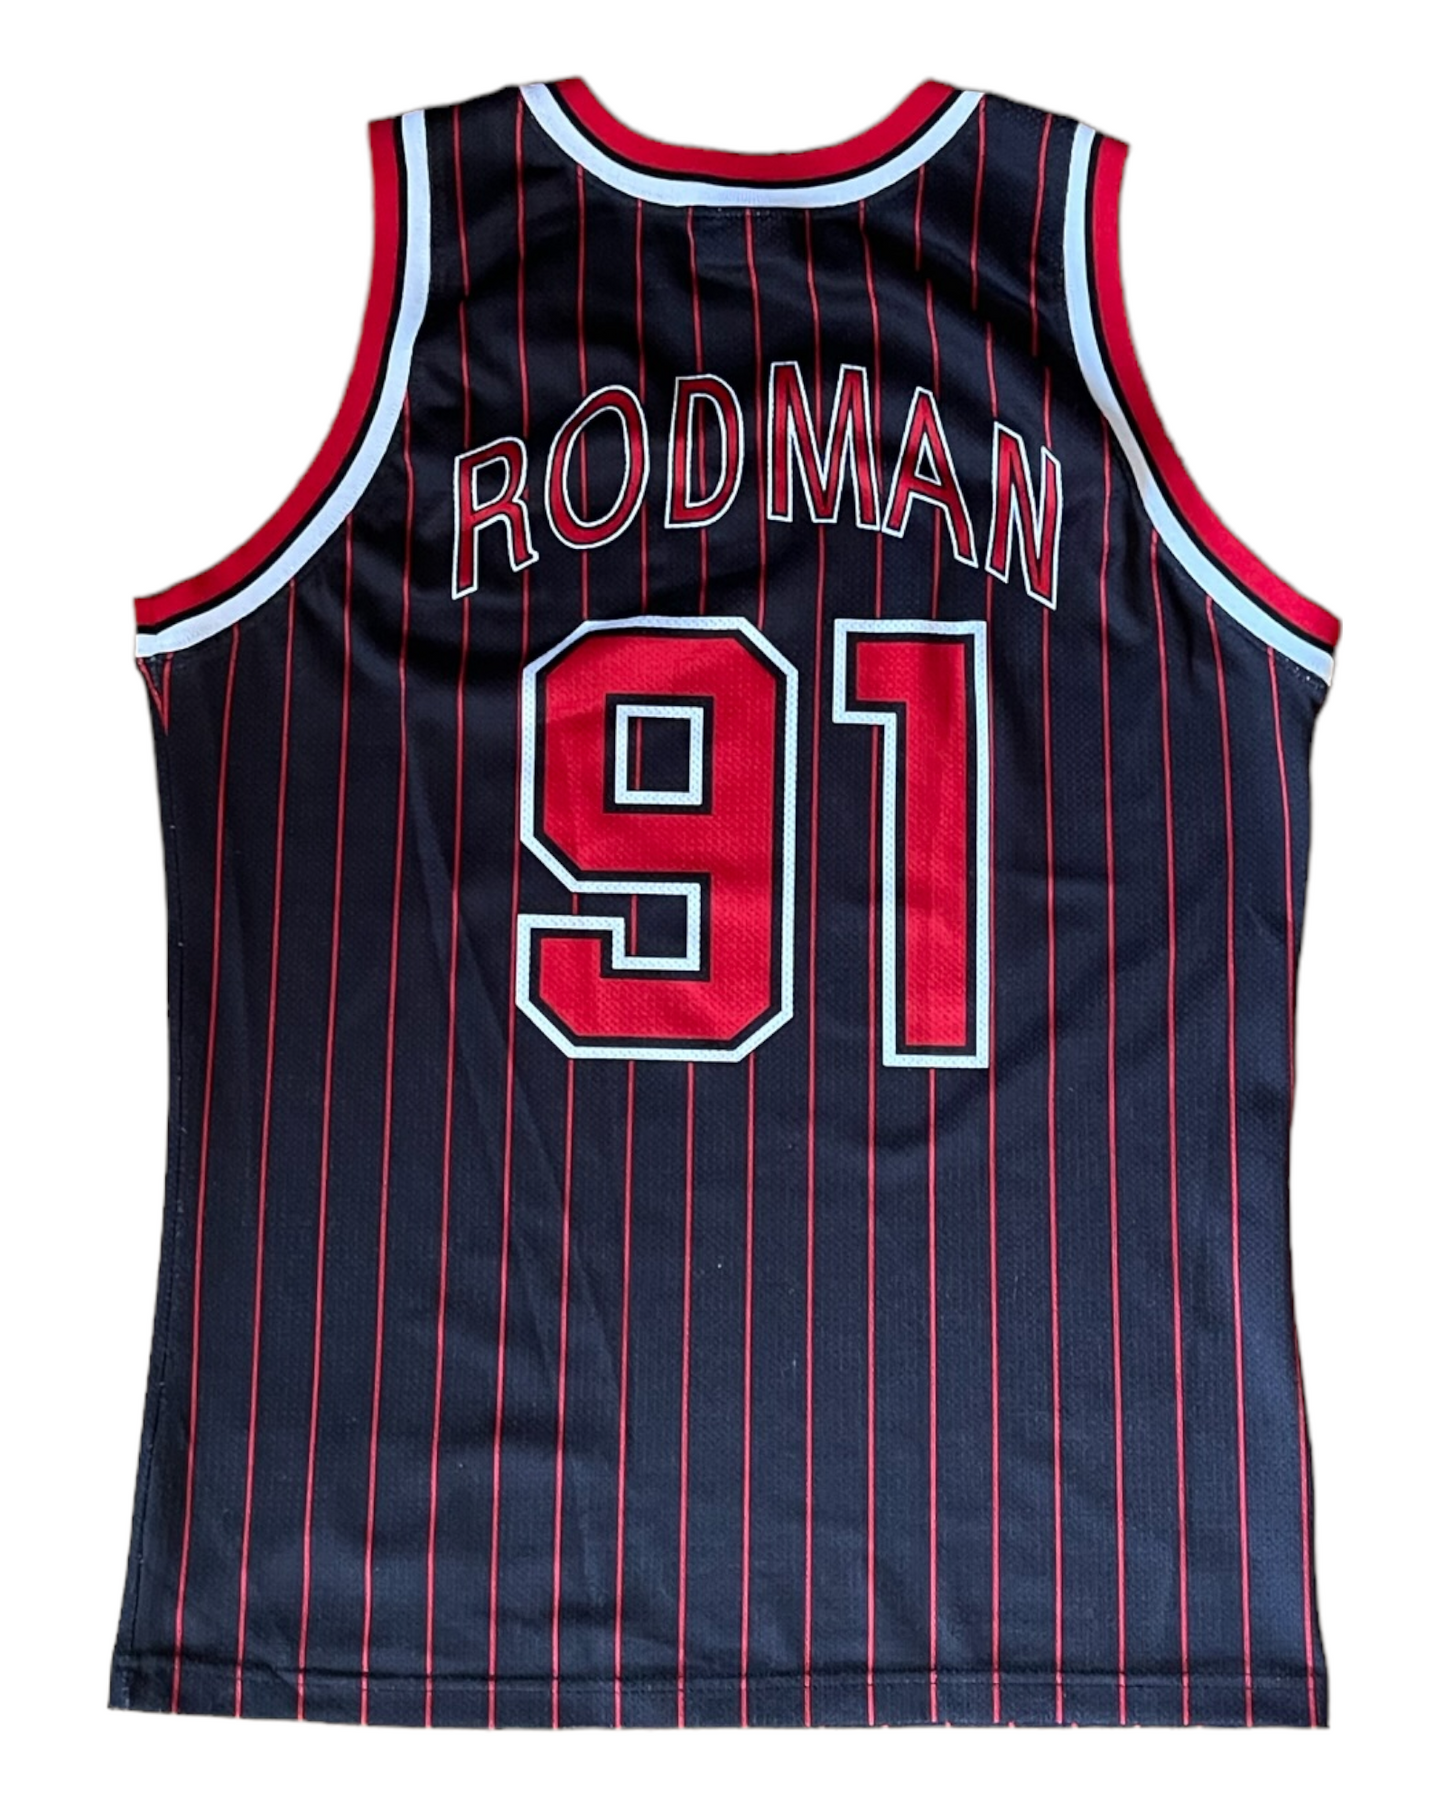 Vintage Chicago Bulls Dennis Rodman Champion 1995-1996 Basketball Away Jersey NBA Black Red Size S-M